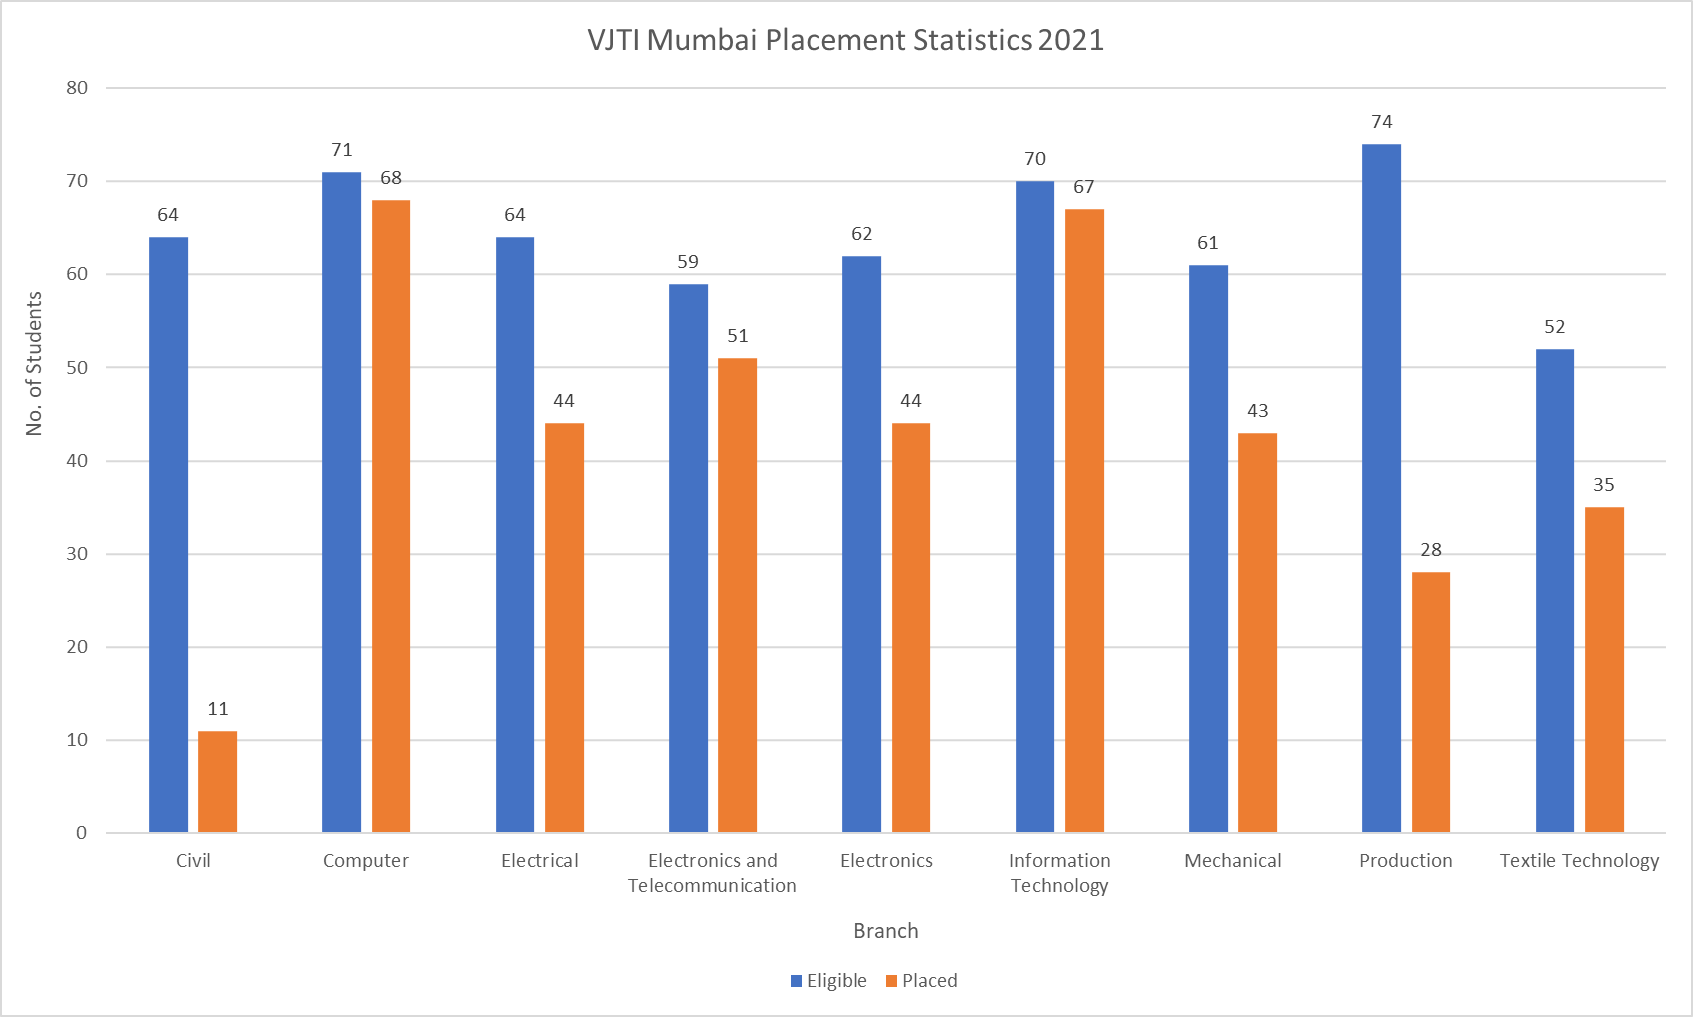 VJTI Mumbai Placement Statistics 2021